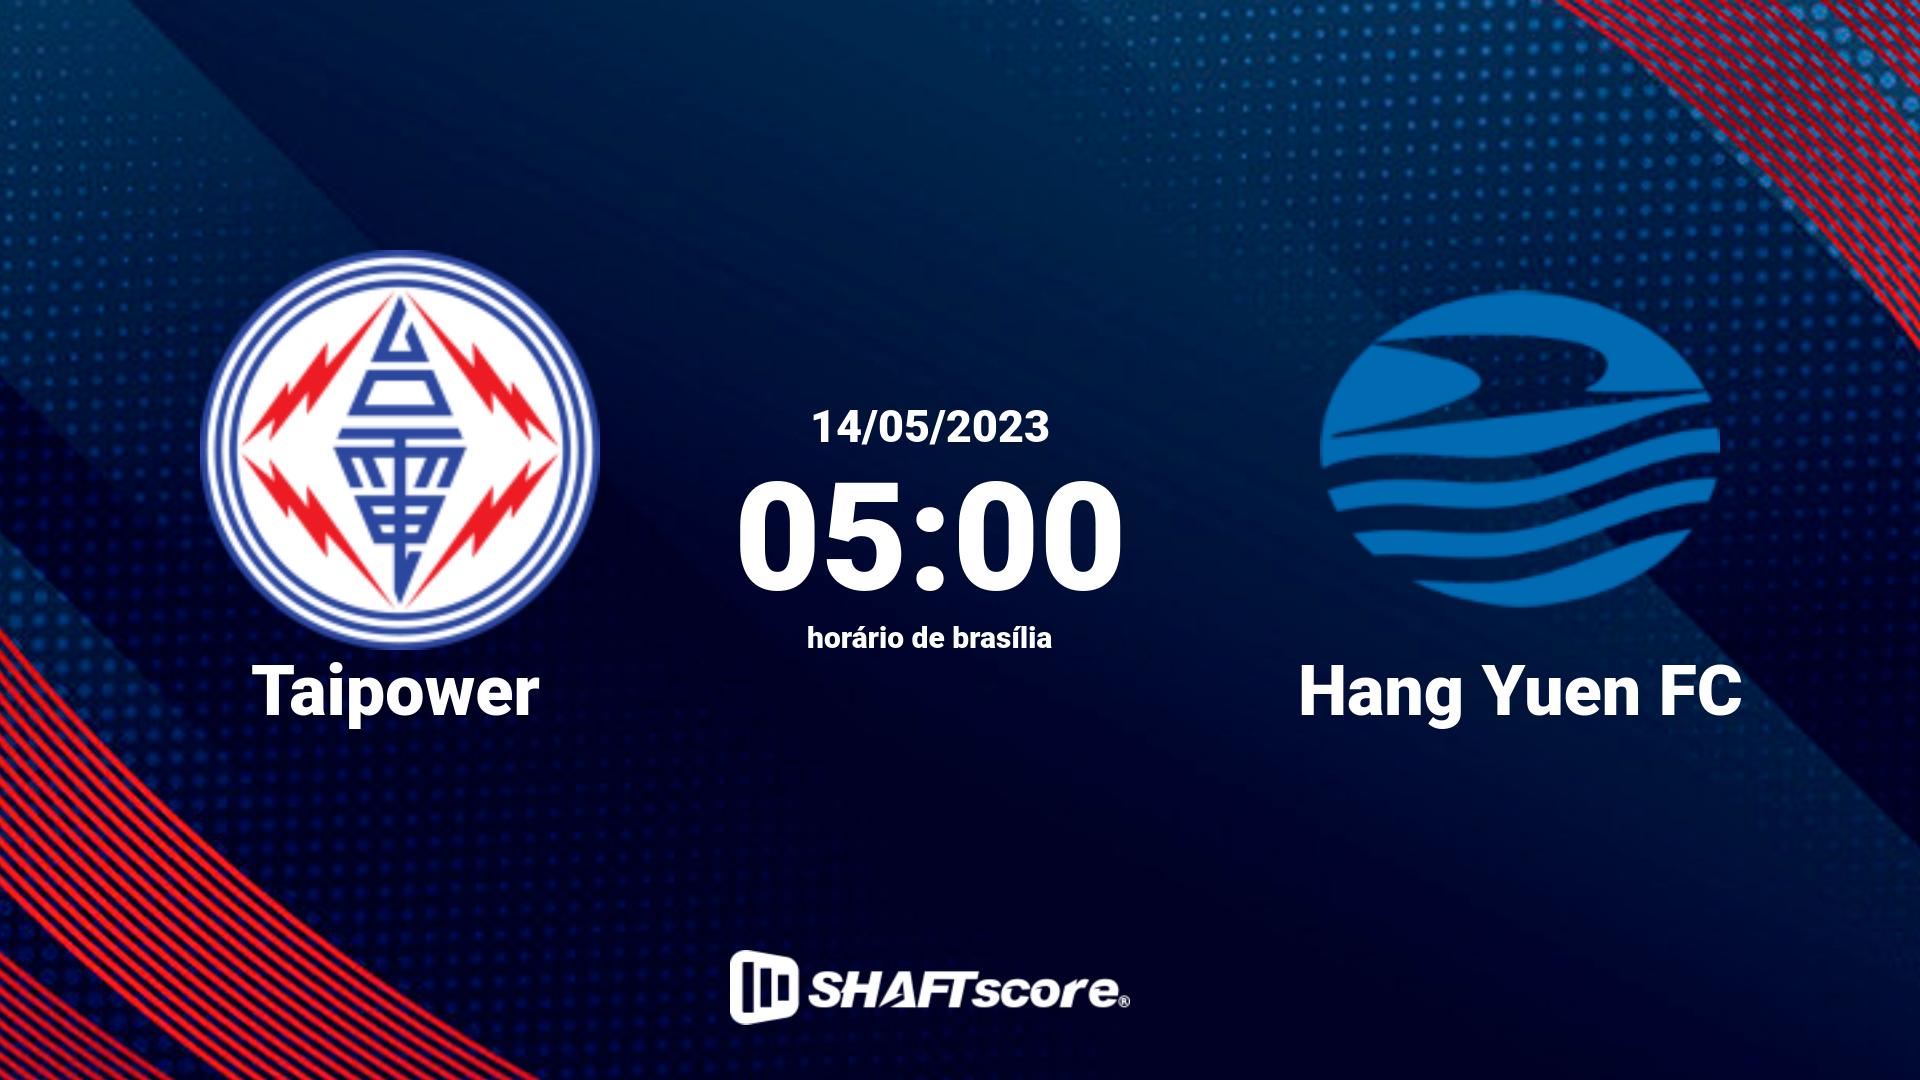 Estatísticas do jogo Taipower vs Hang Yuen FC 14.05 05:00